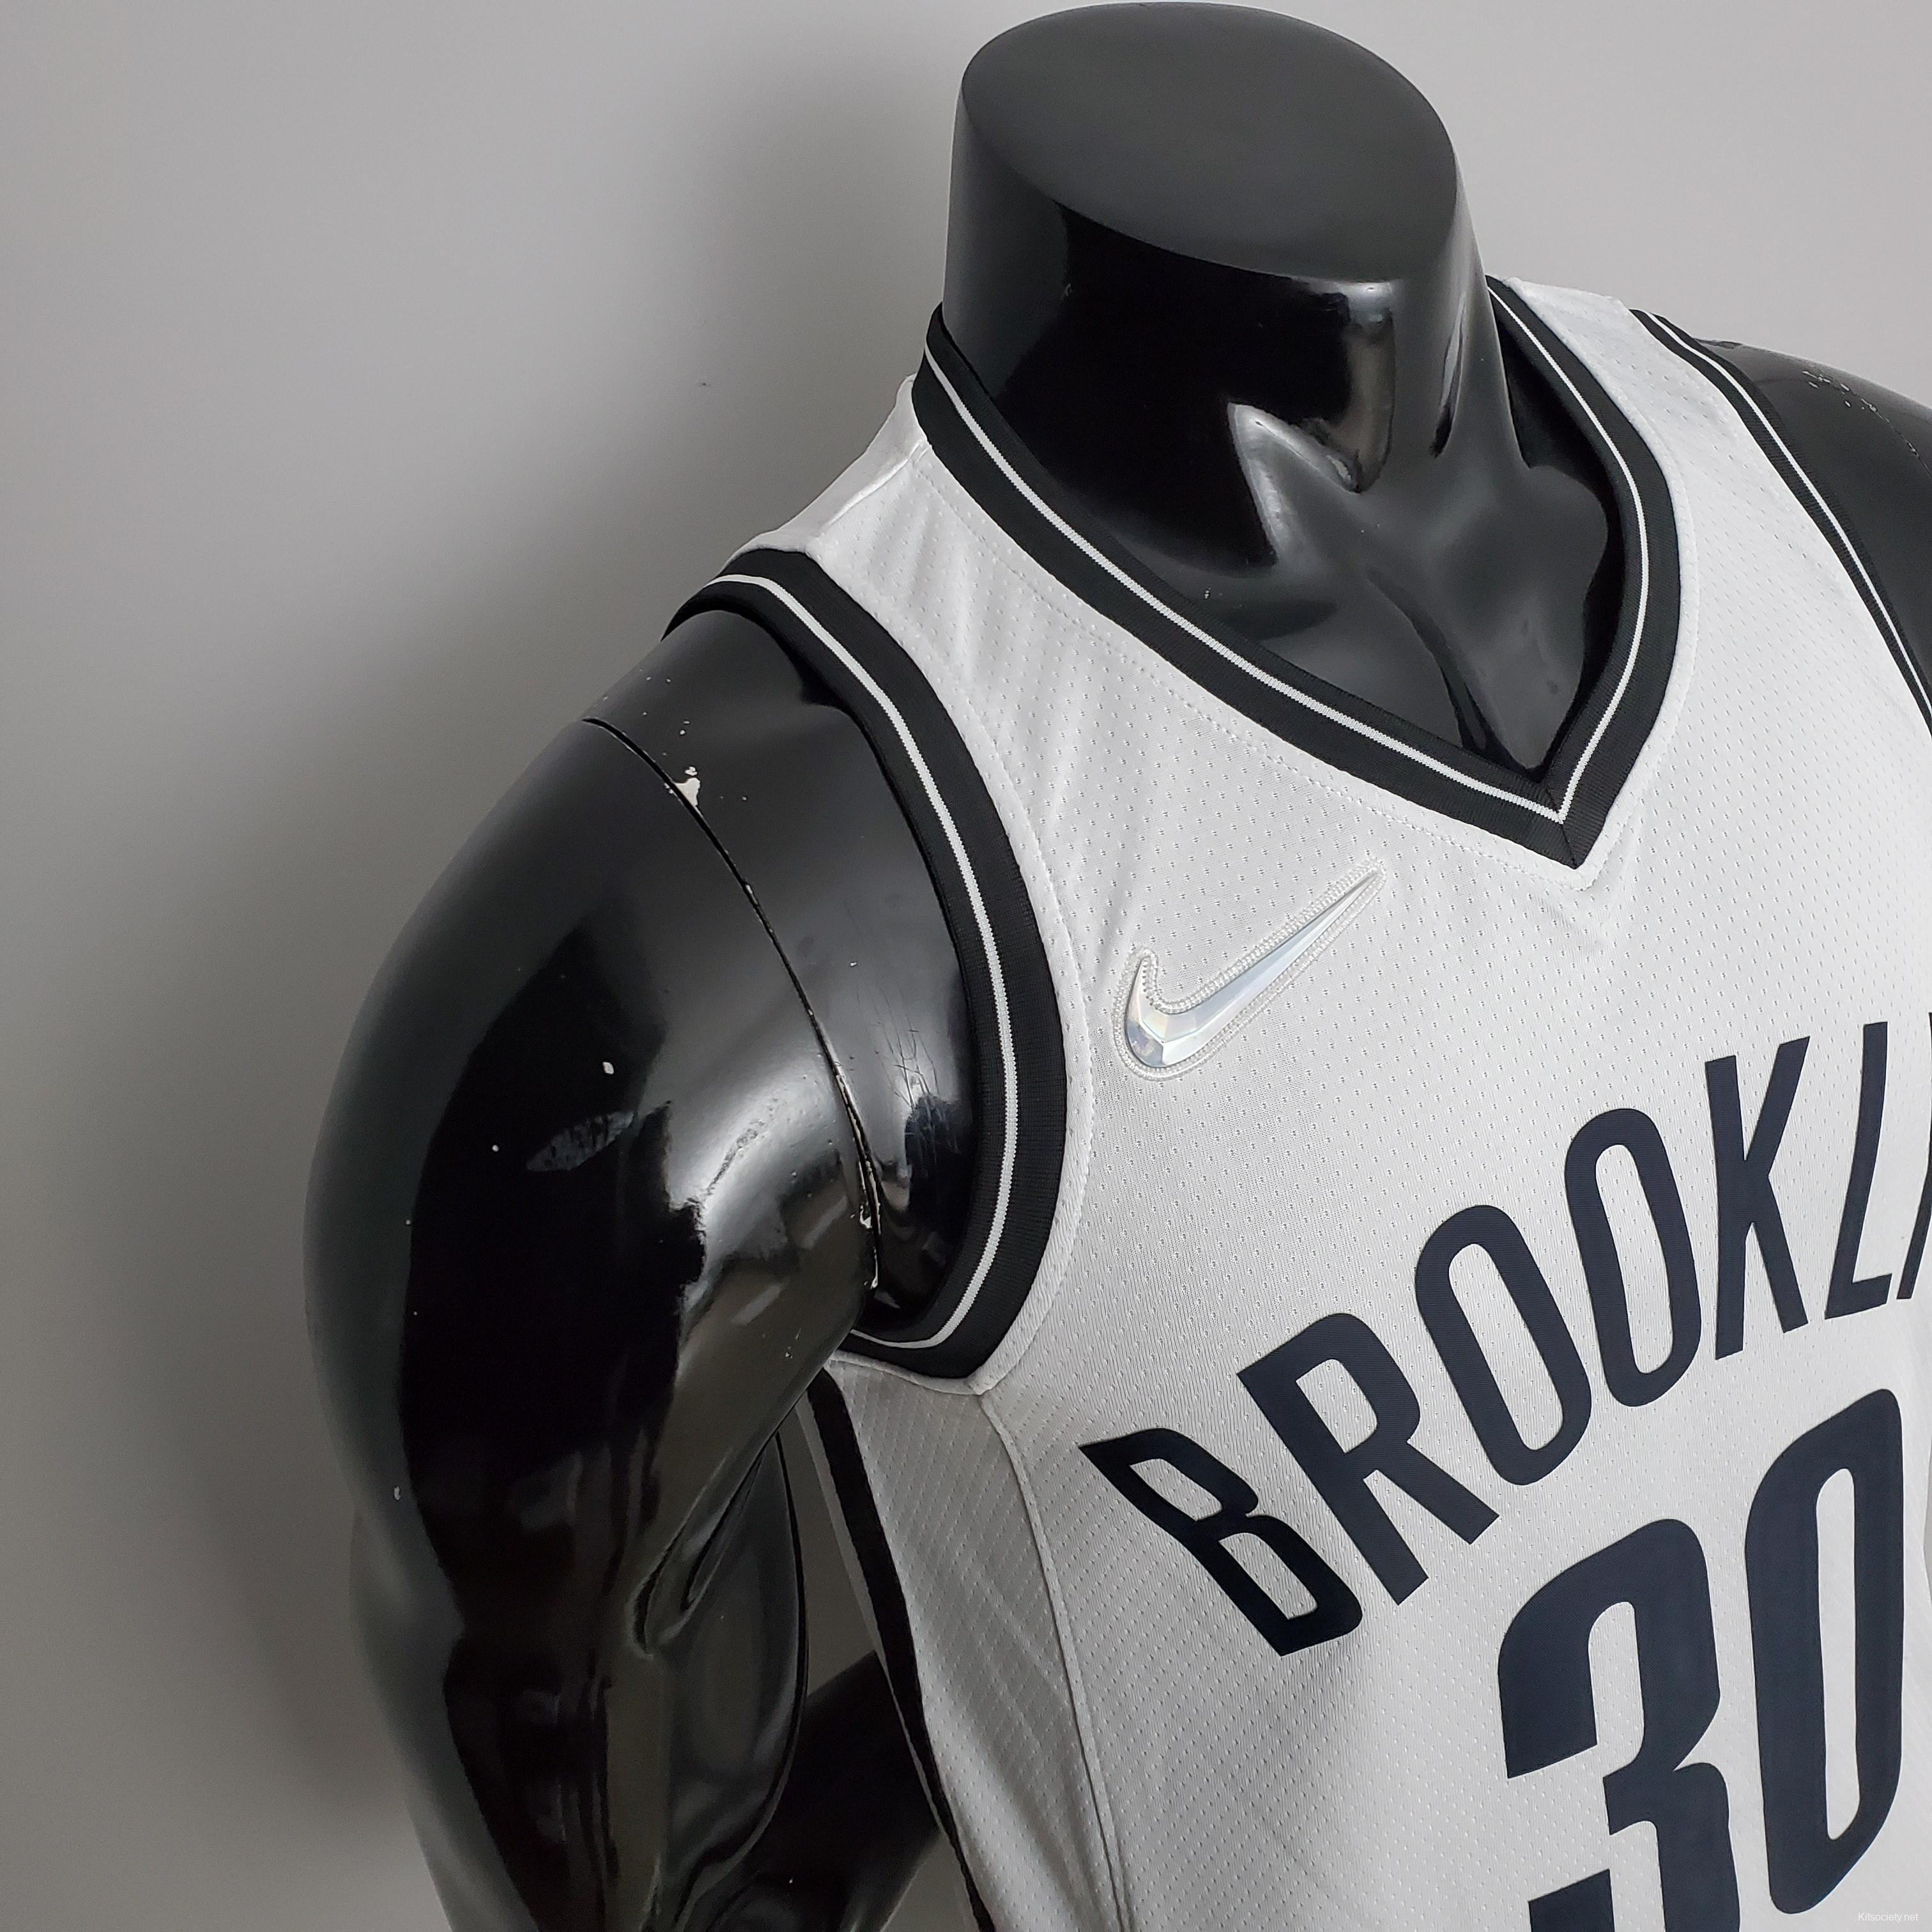 NBA Nets Curry #30 Flyer Grey Jersey - Kitsociety